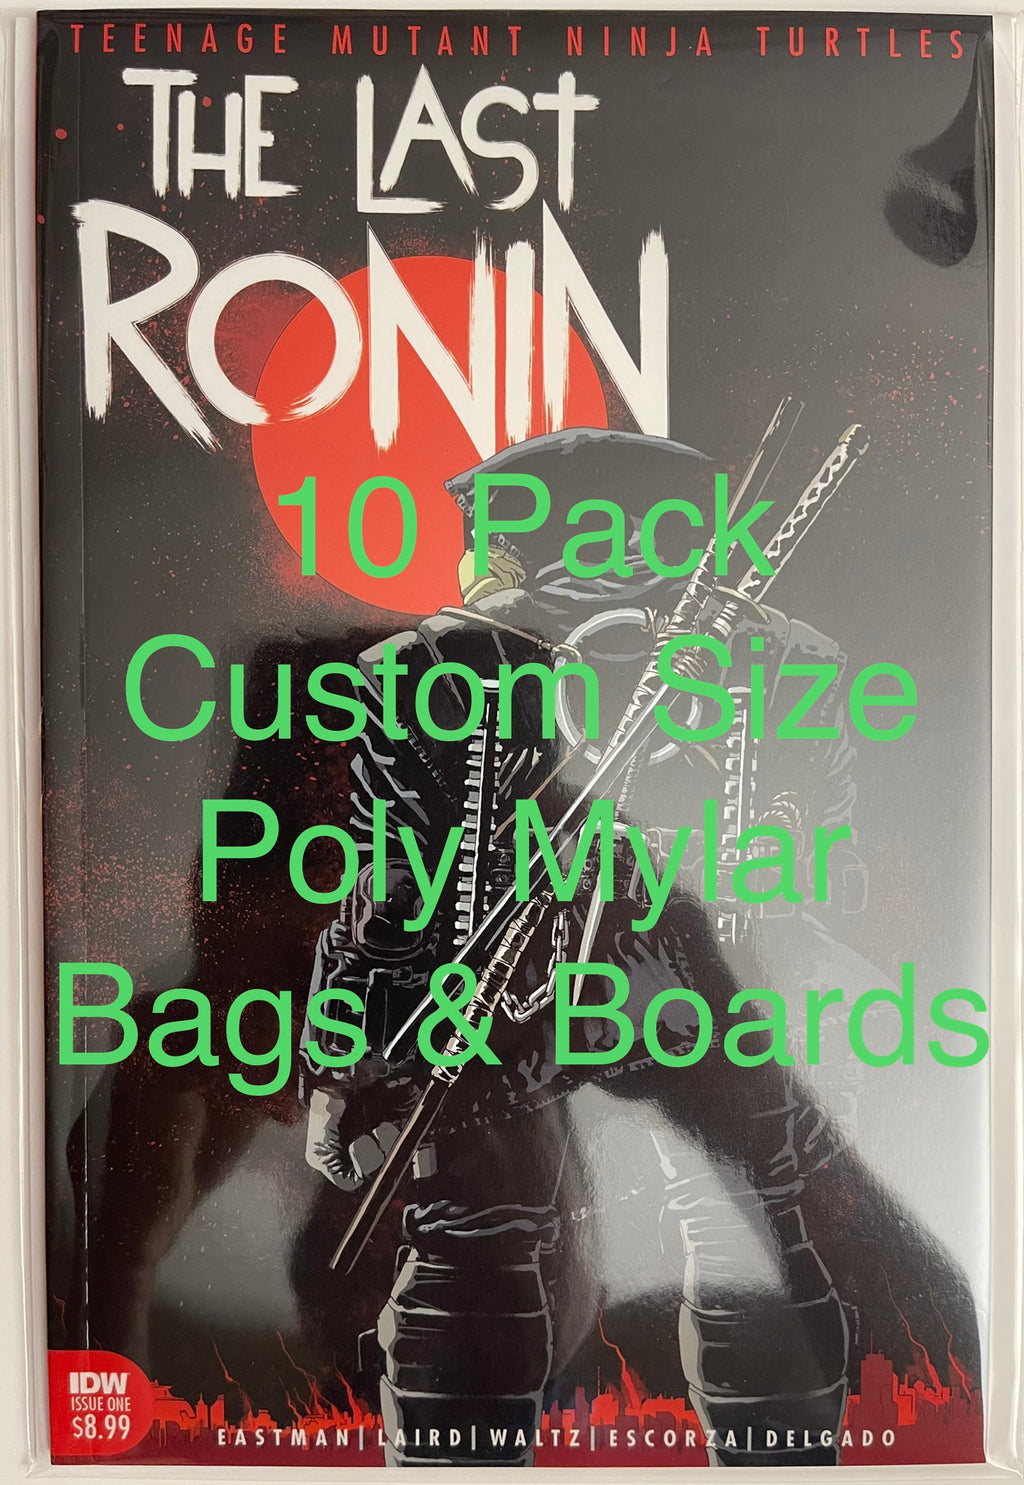 10 Pack Teenage Mutant Ninja Turtles The Last Ronin #1 Poly Mylar Bags & Custom BCW Boards